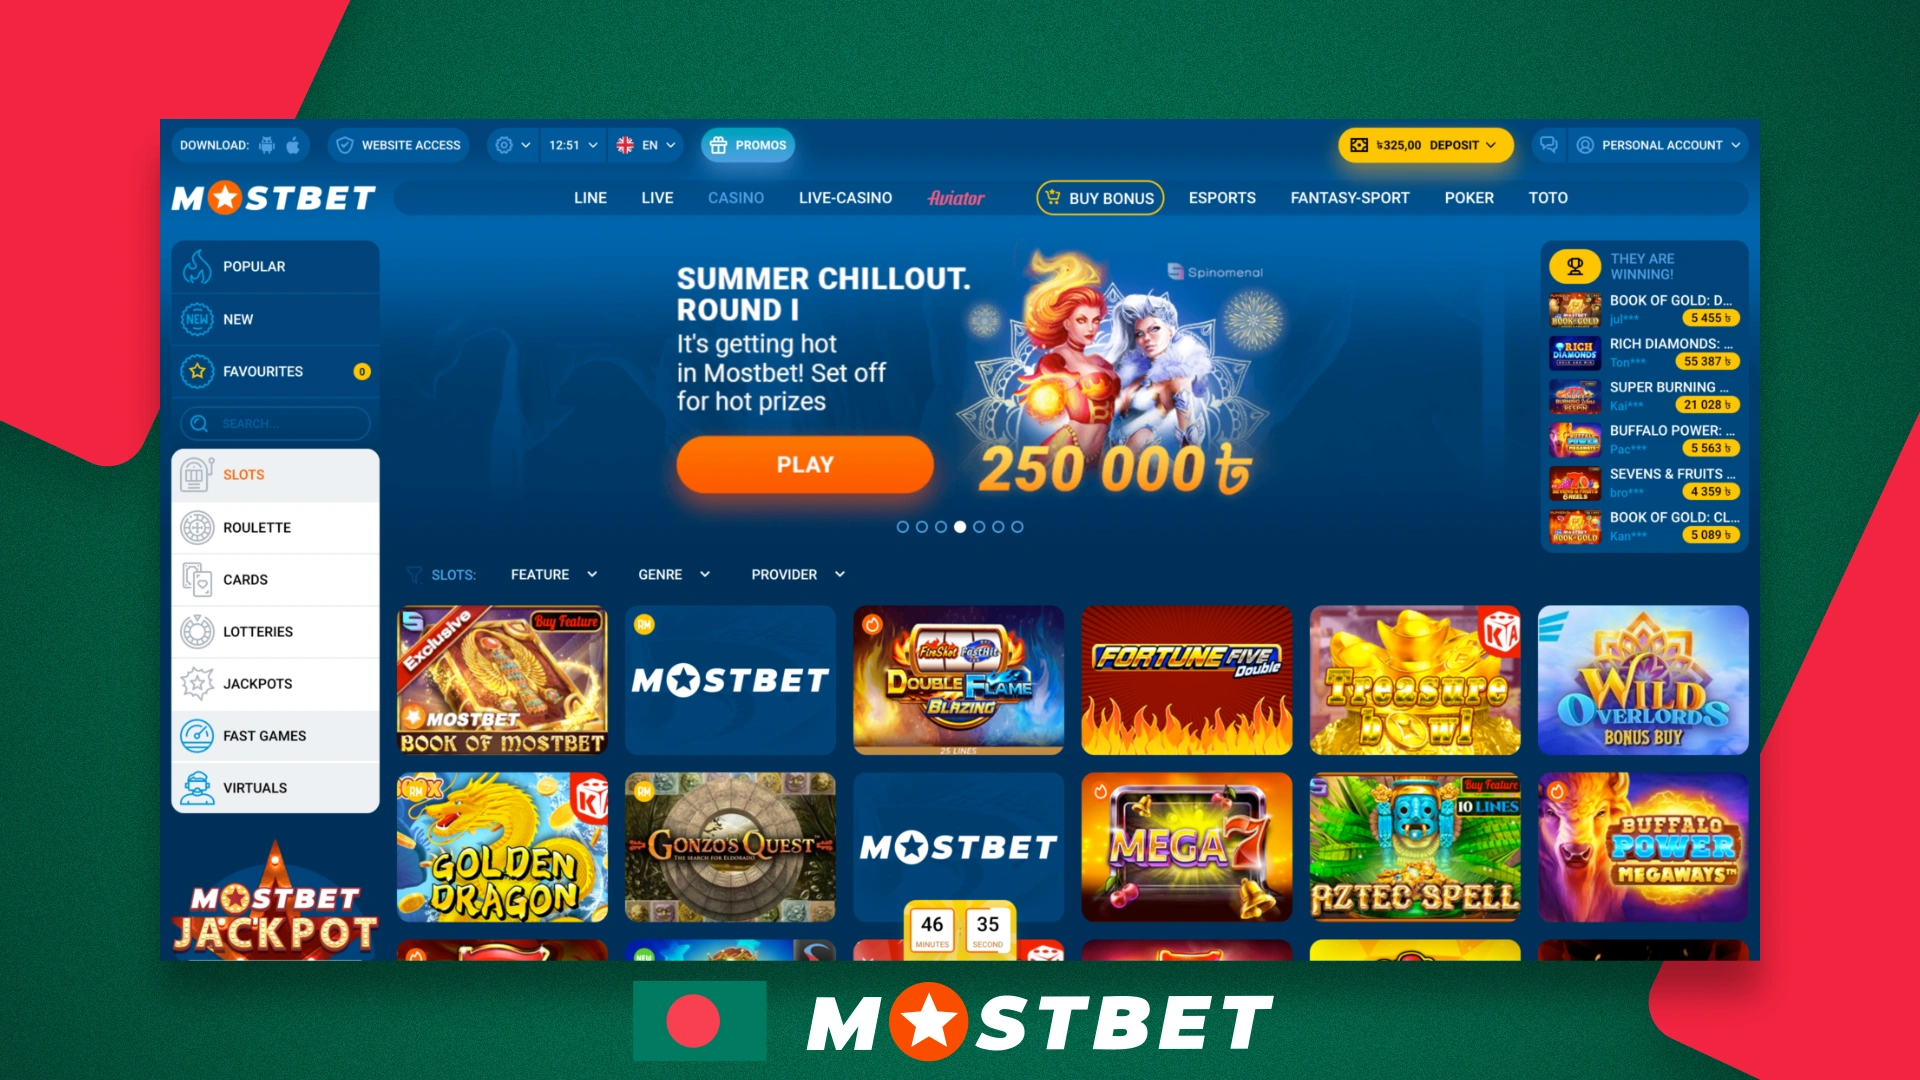 Popular gambling among Mostbet customers from Bangladesh